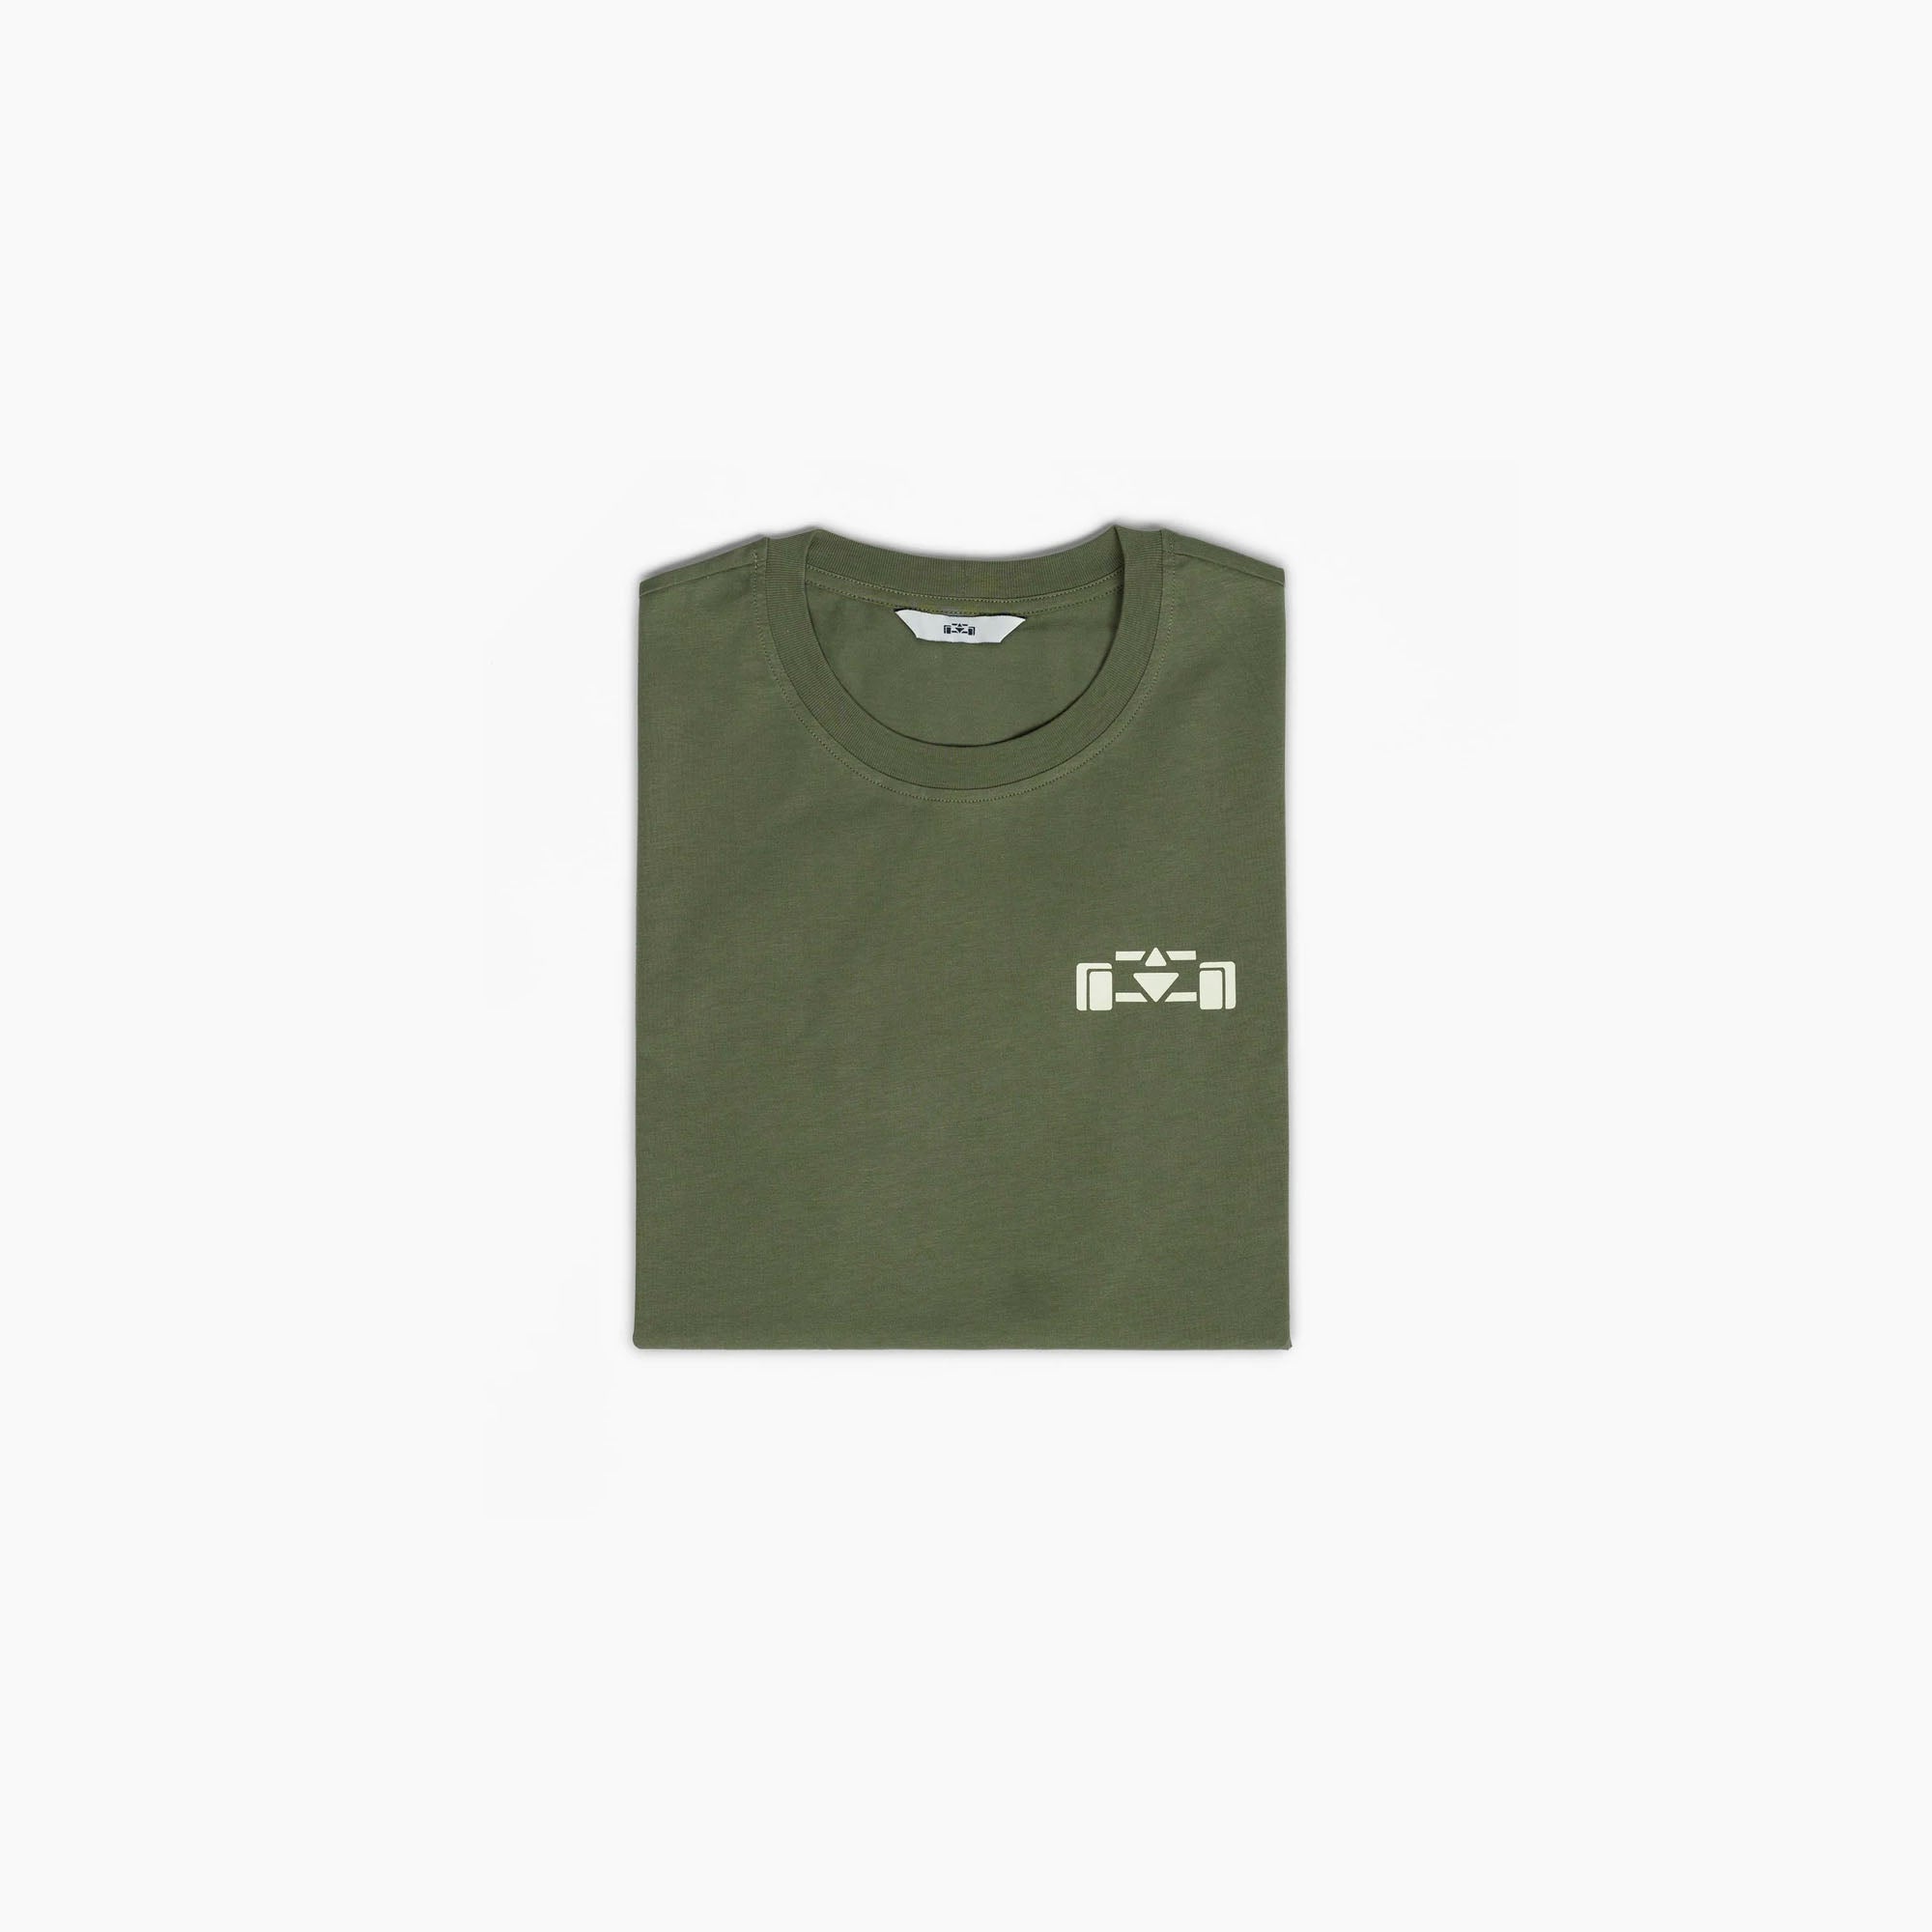 8JS | Grand Prix Long Sleeve T-Shirt - Dusty Olive-T-Shirt-8JS-gpx-store